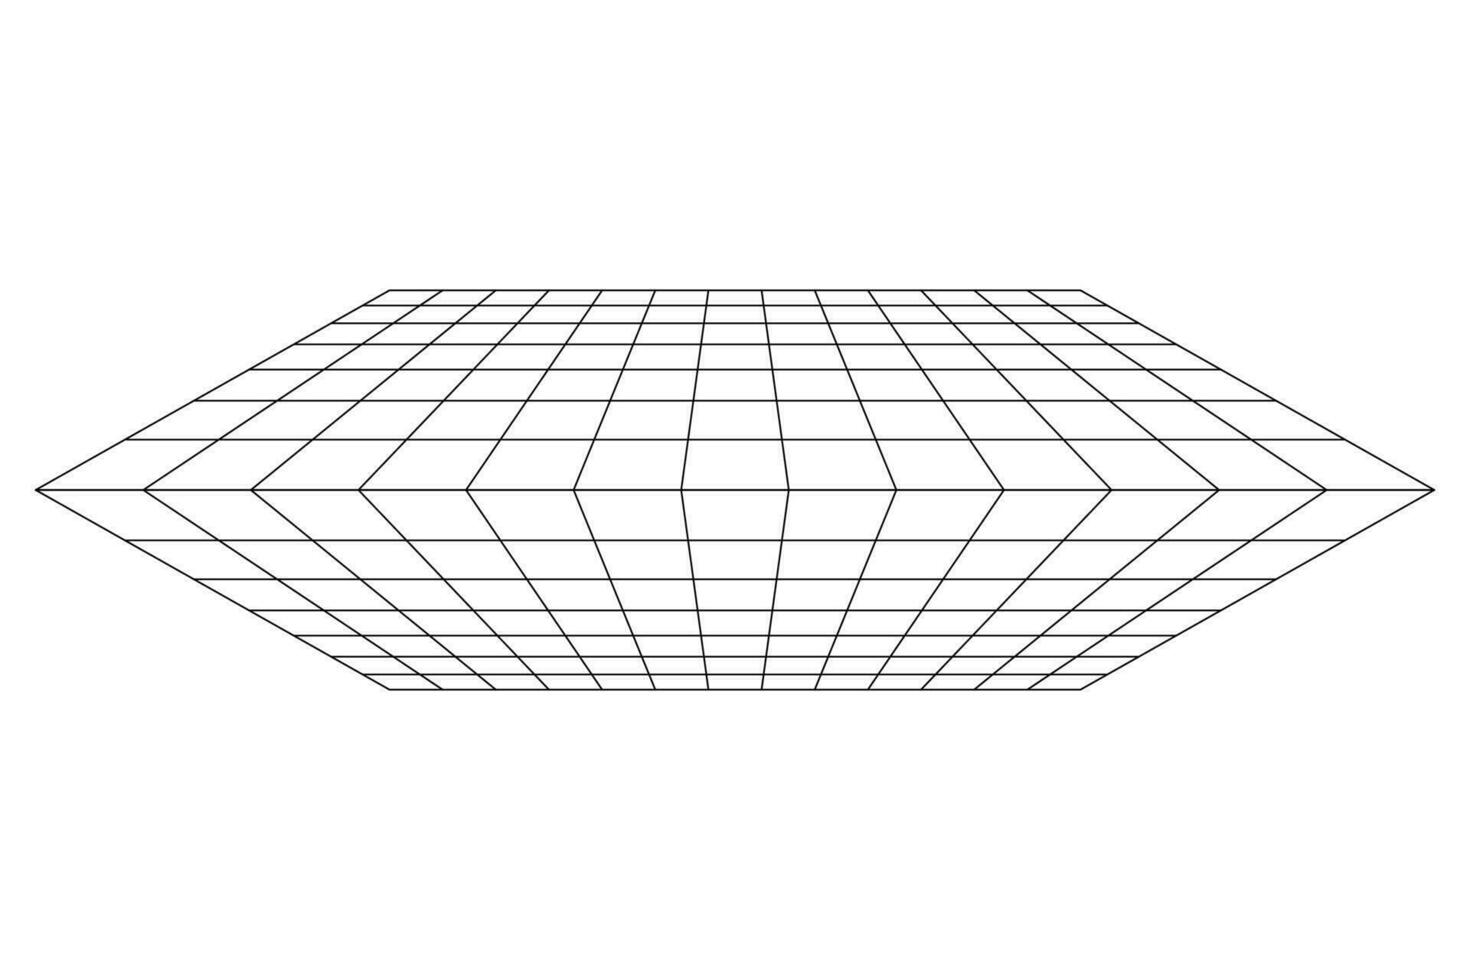 Perspective grid room background vector illustration.